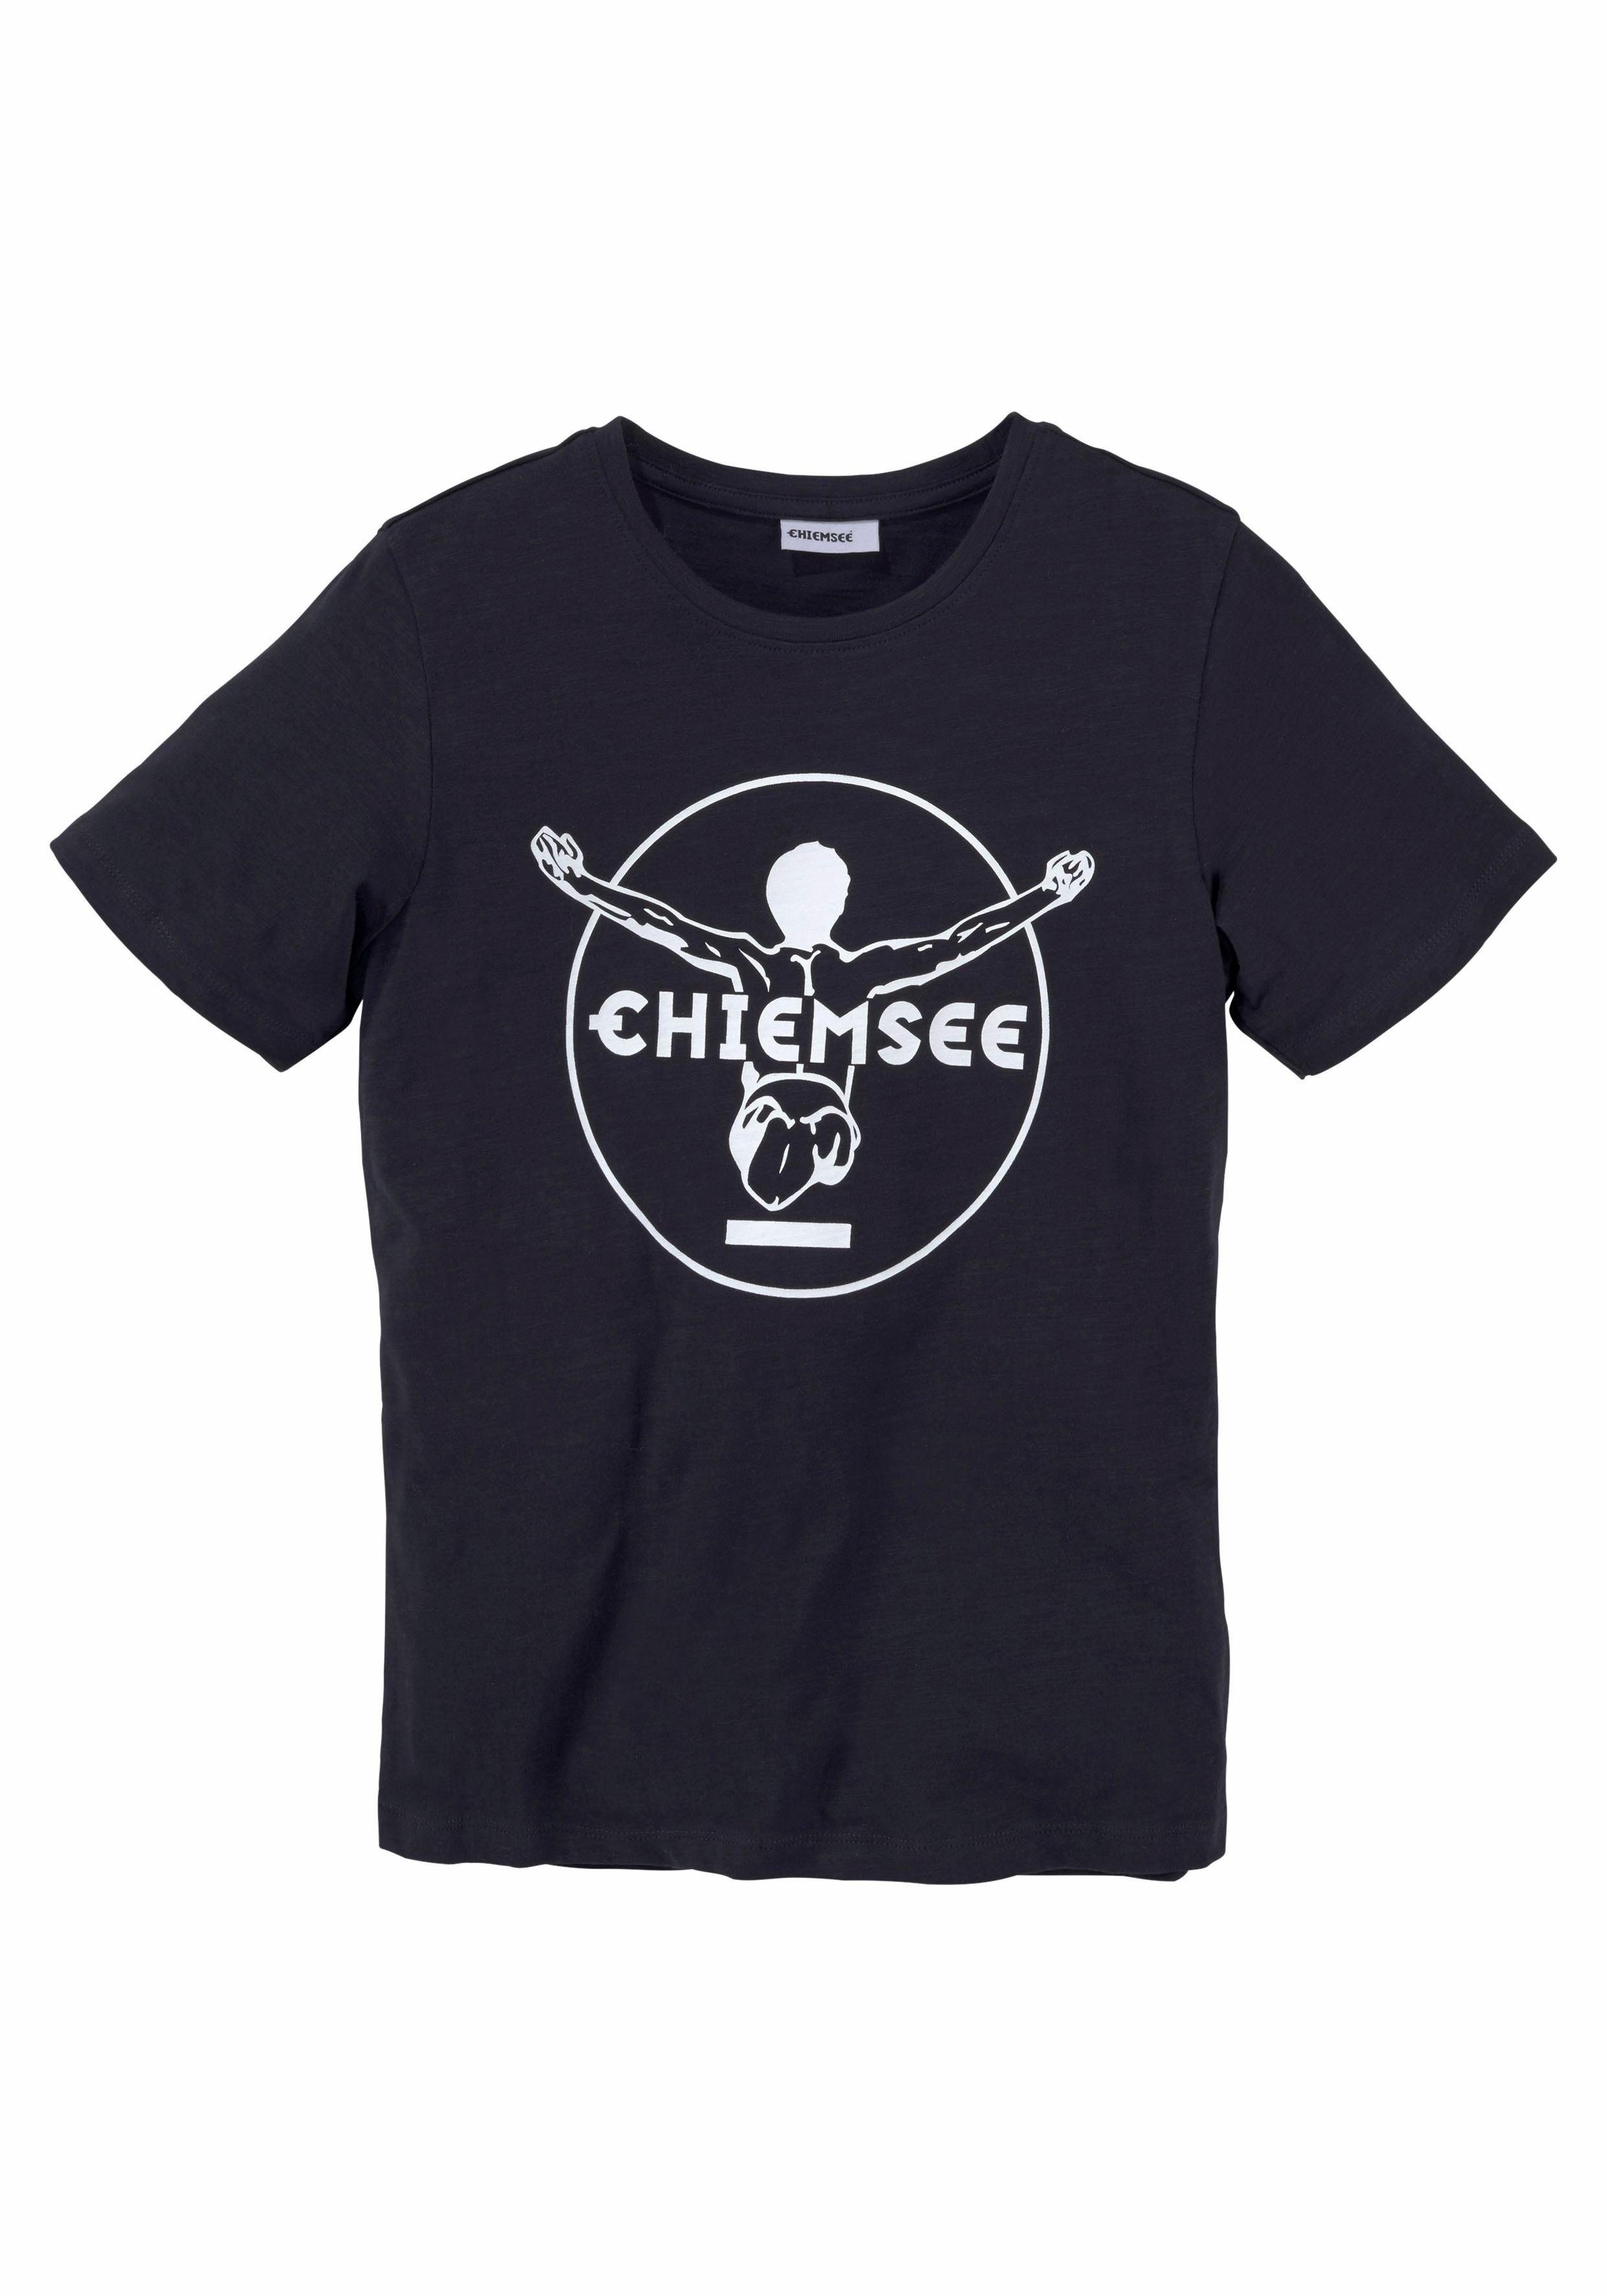 Otto - CHIEMSEE NU 15% KORTING: Chiemsee T-shirt